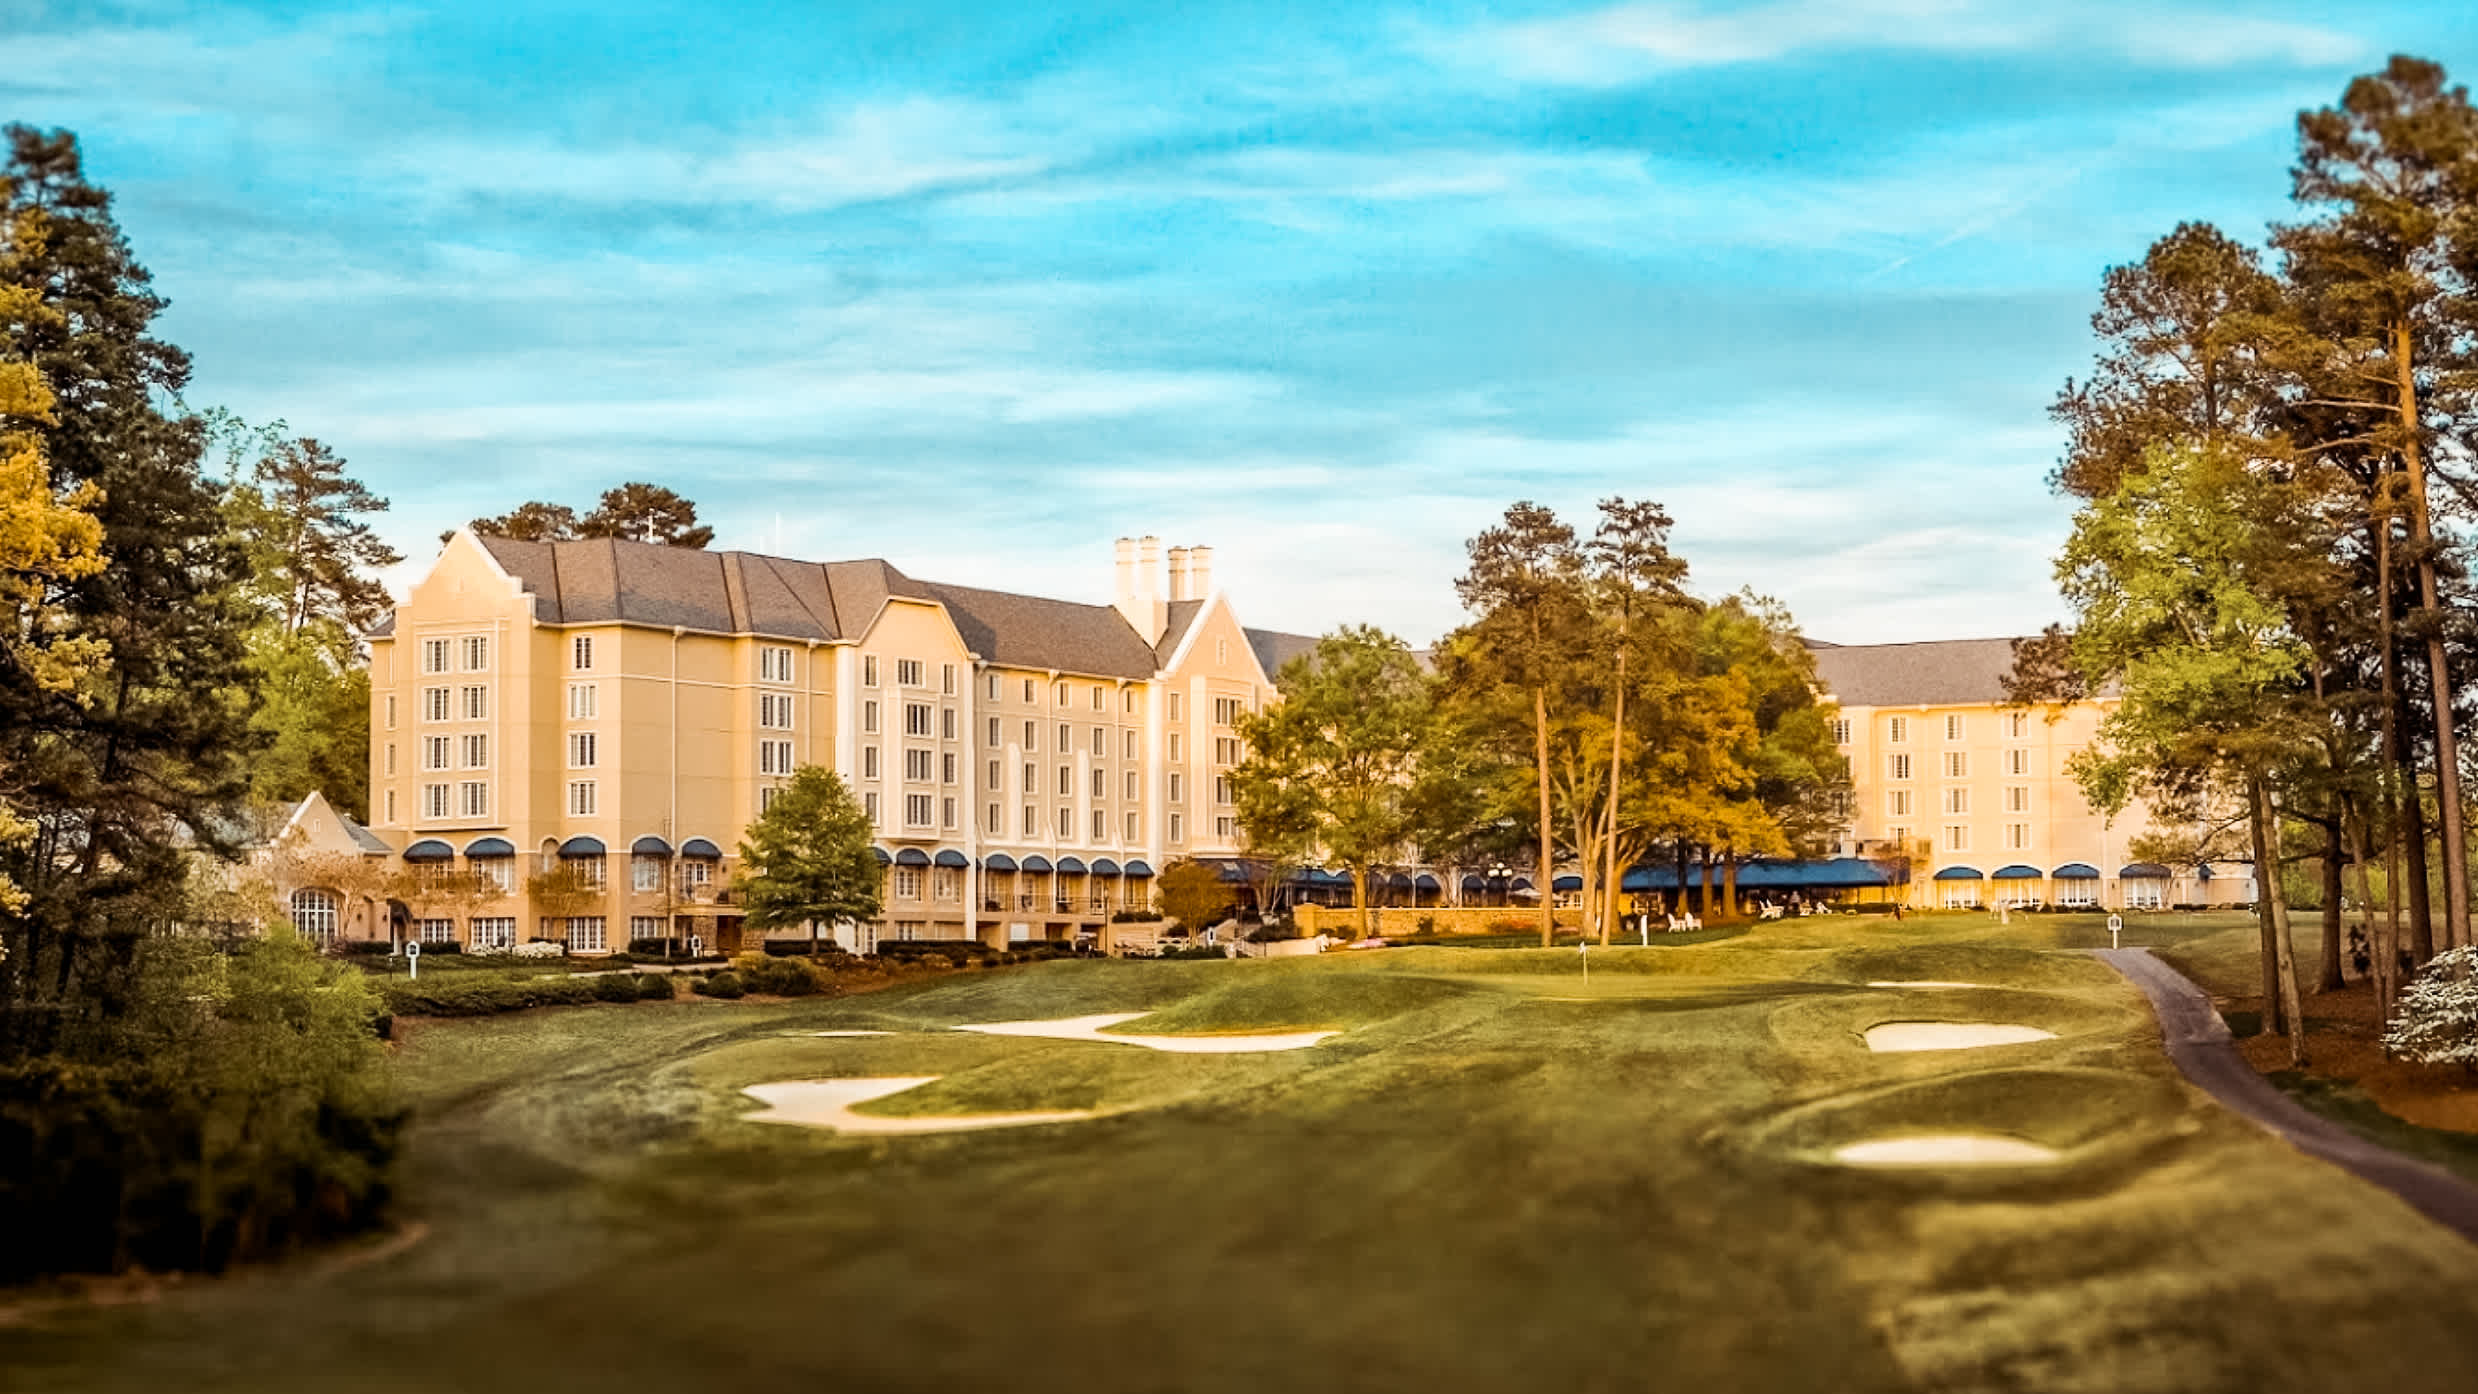 Washington Duke Inn and Golf Club, JB Duke Hotel